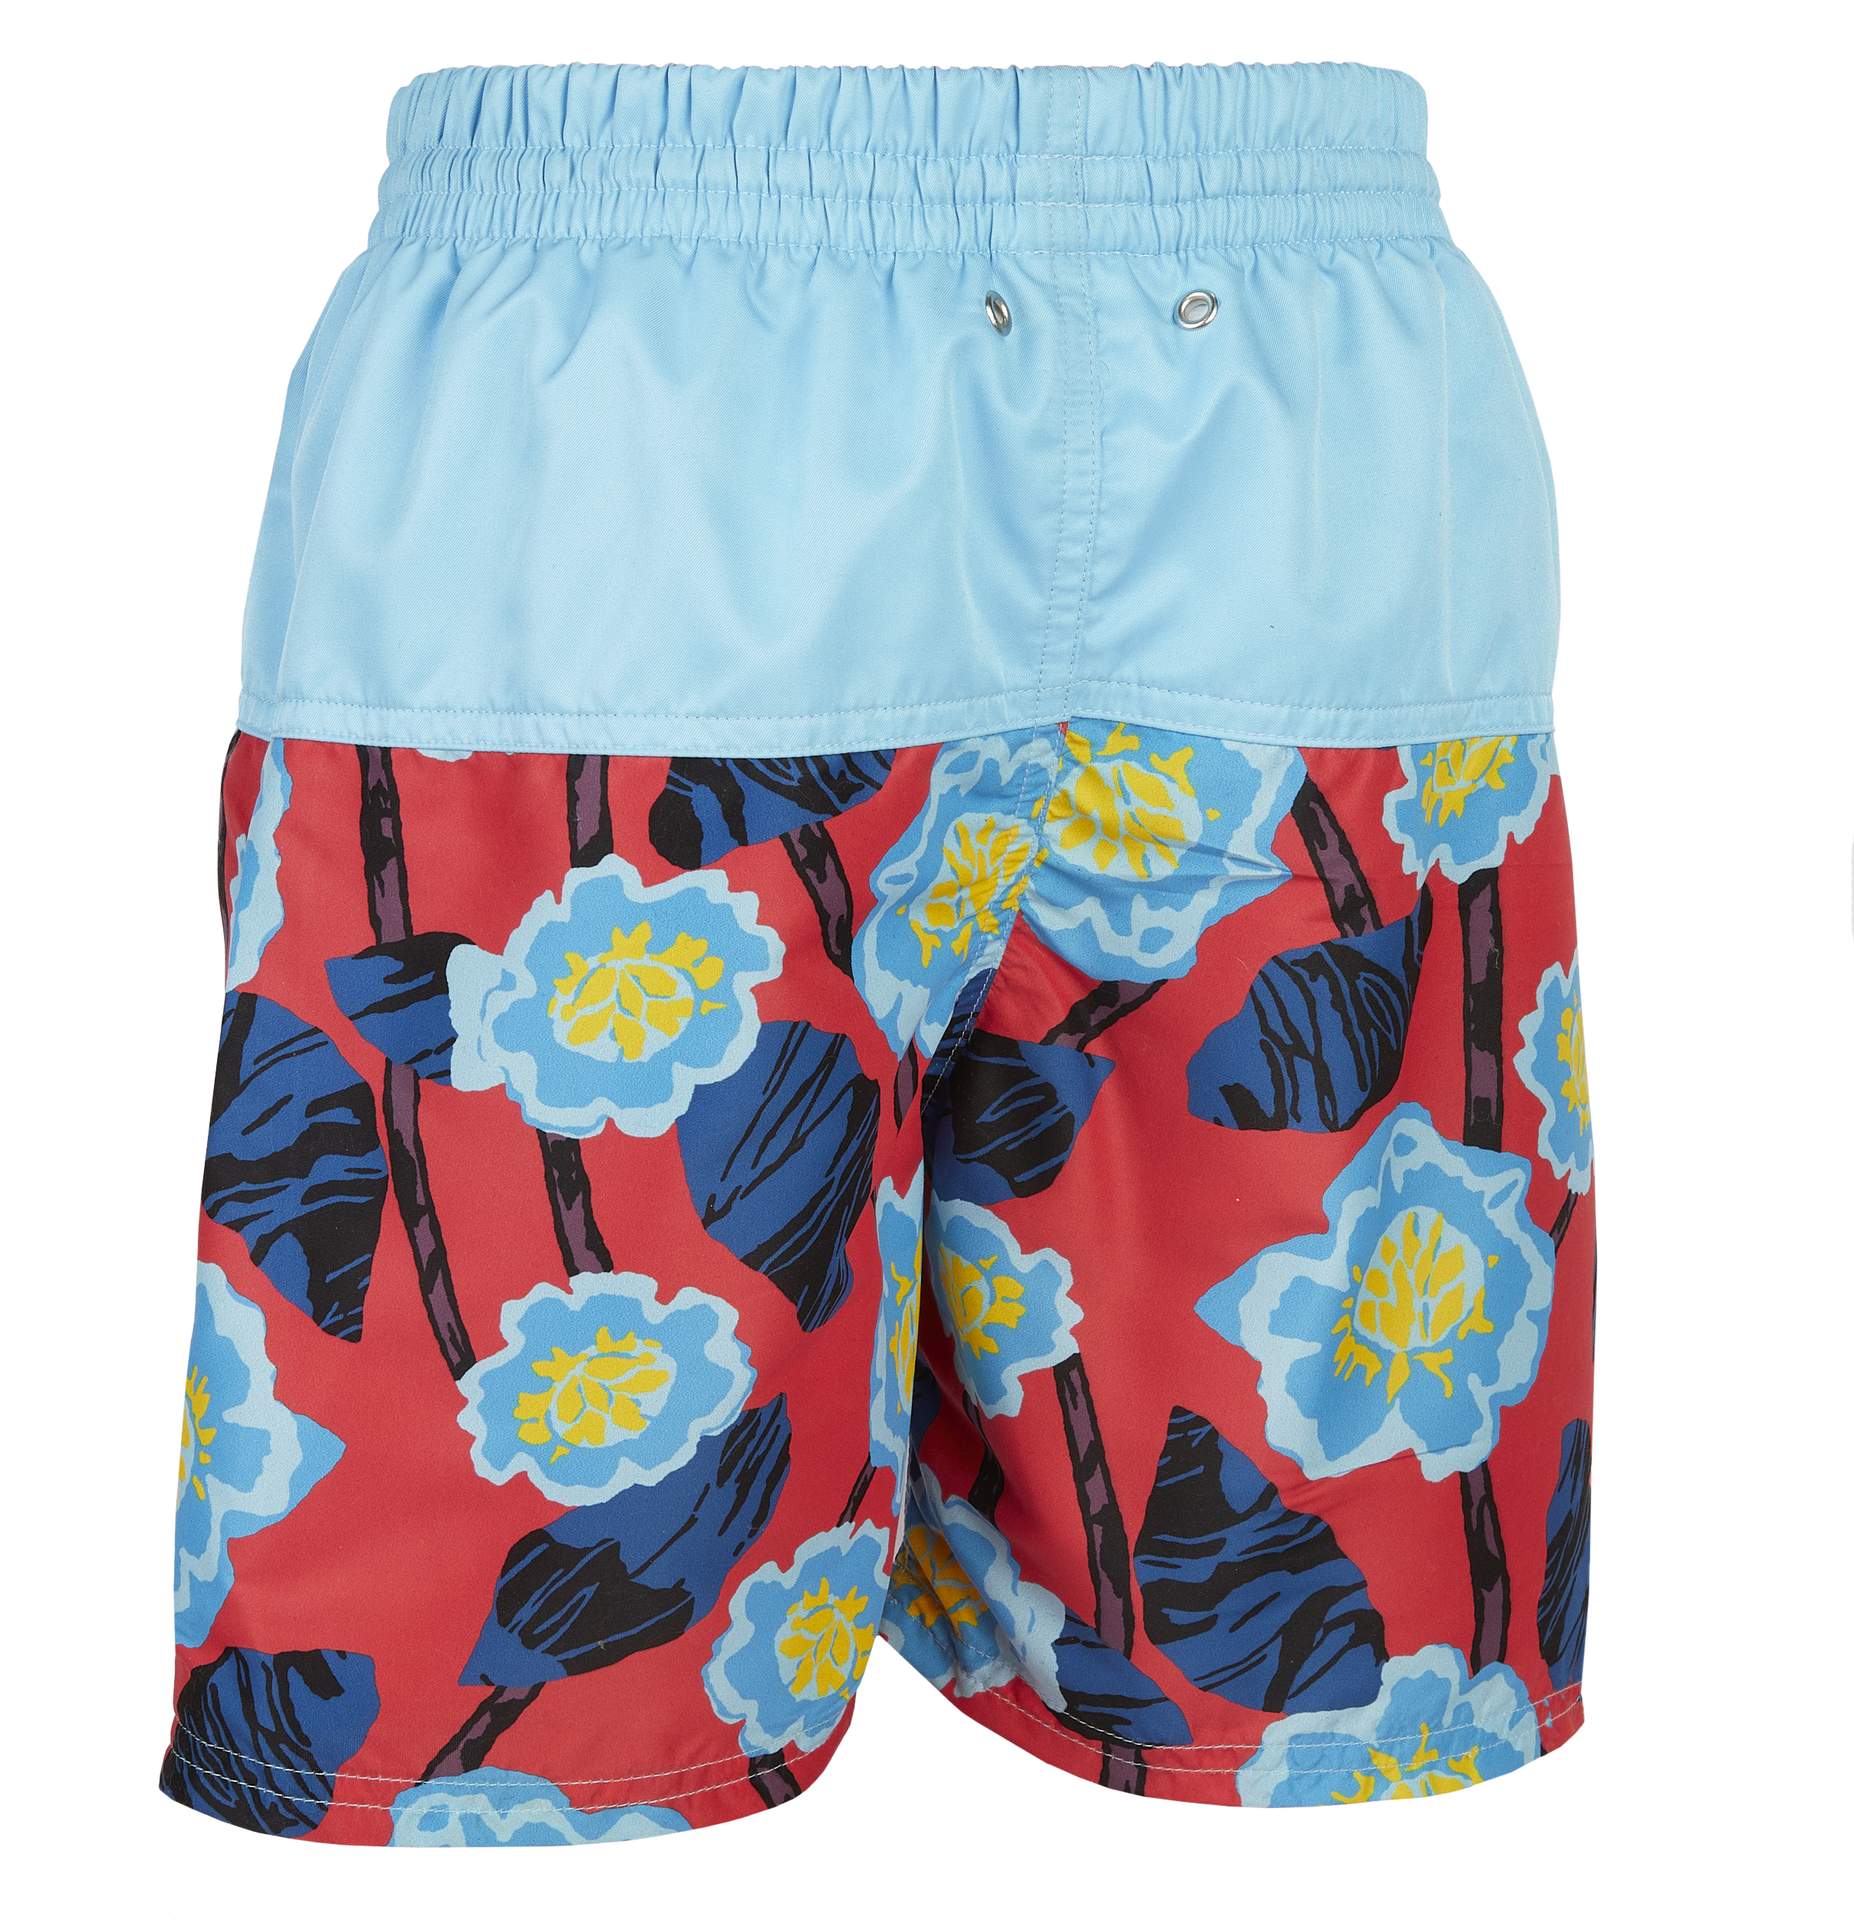 Kes-Vir Boy's Board Swim Shorts - Floral Blue 4